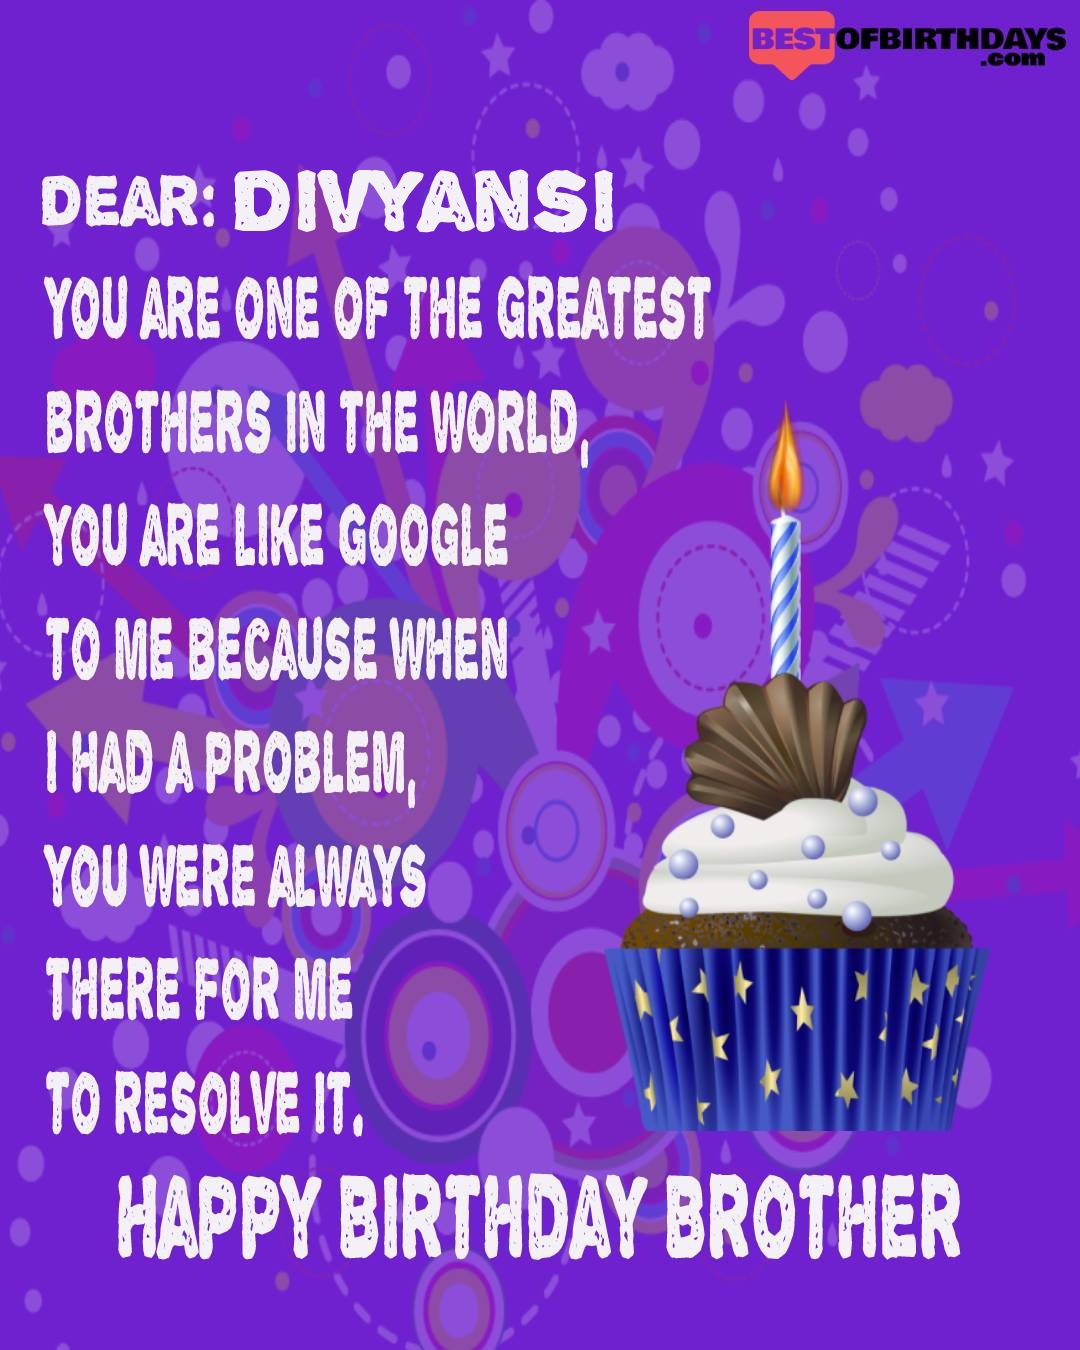 Happy birthday divyansi bhai brother bro